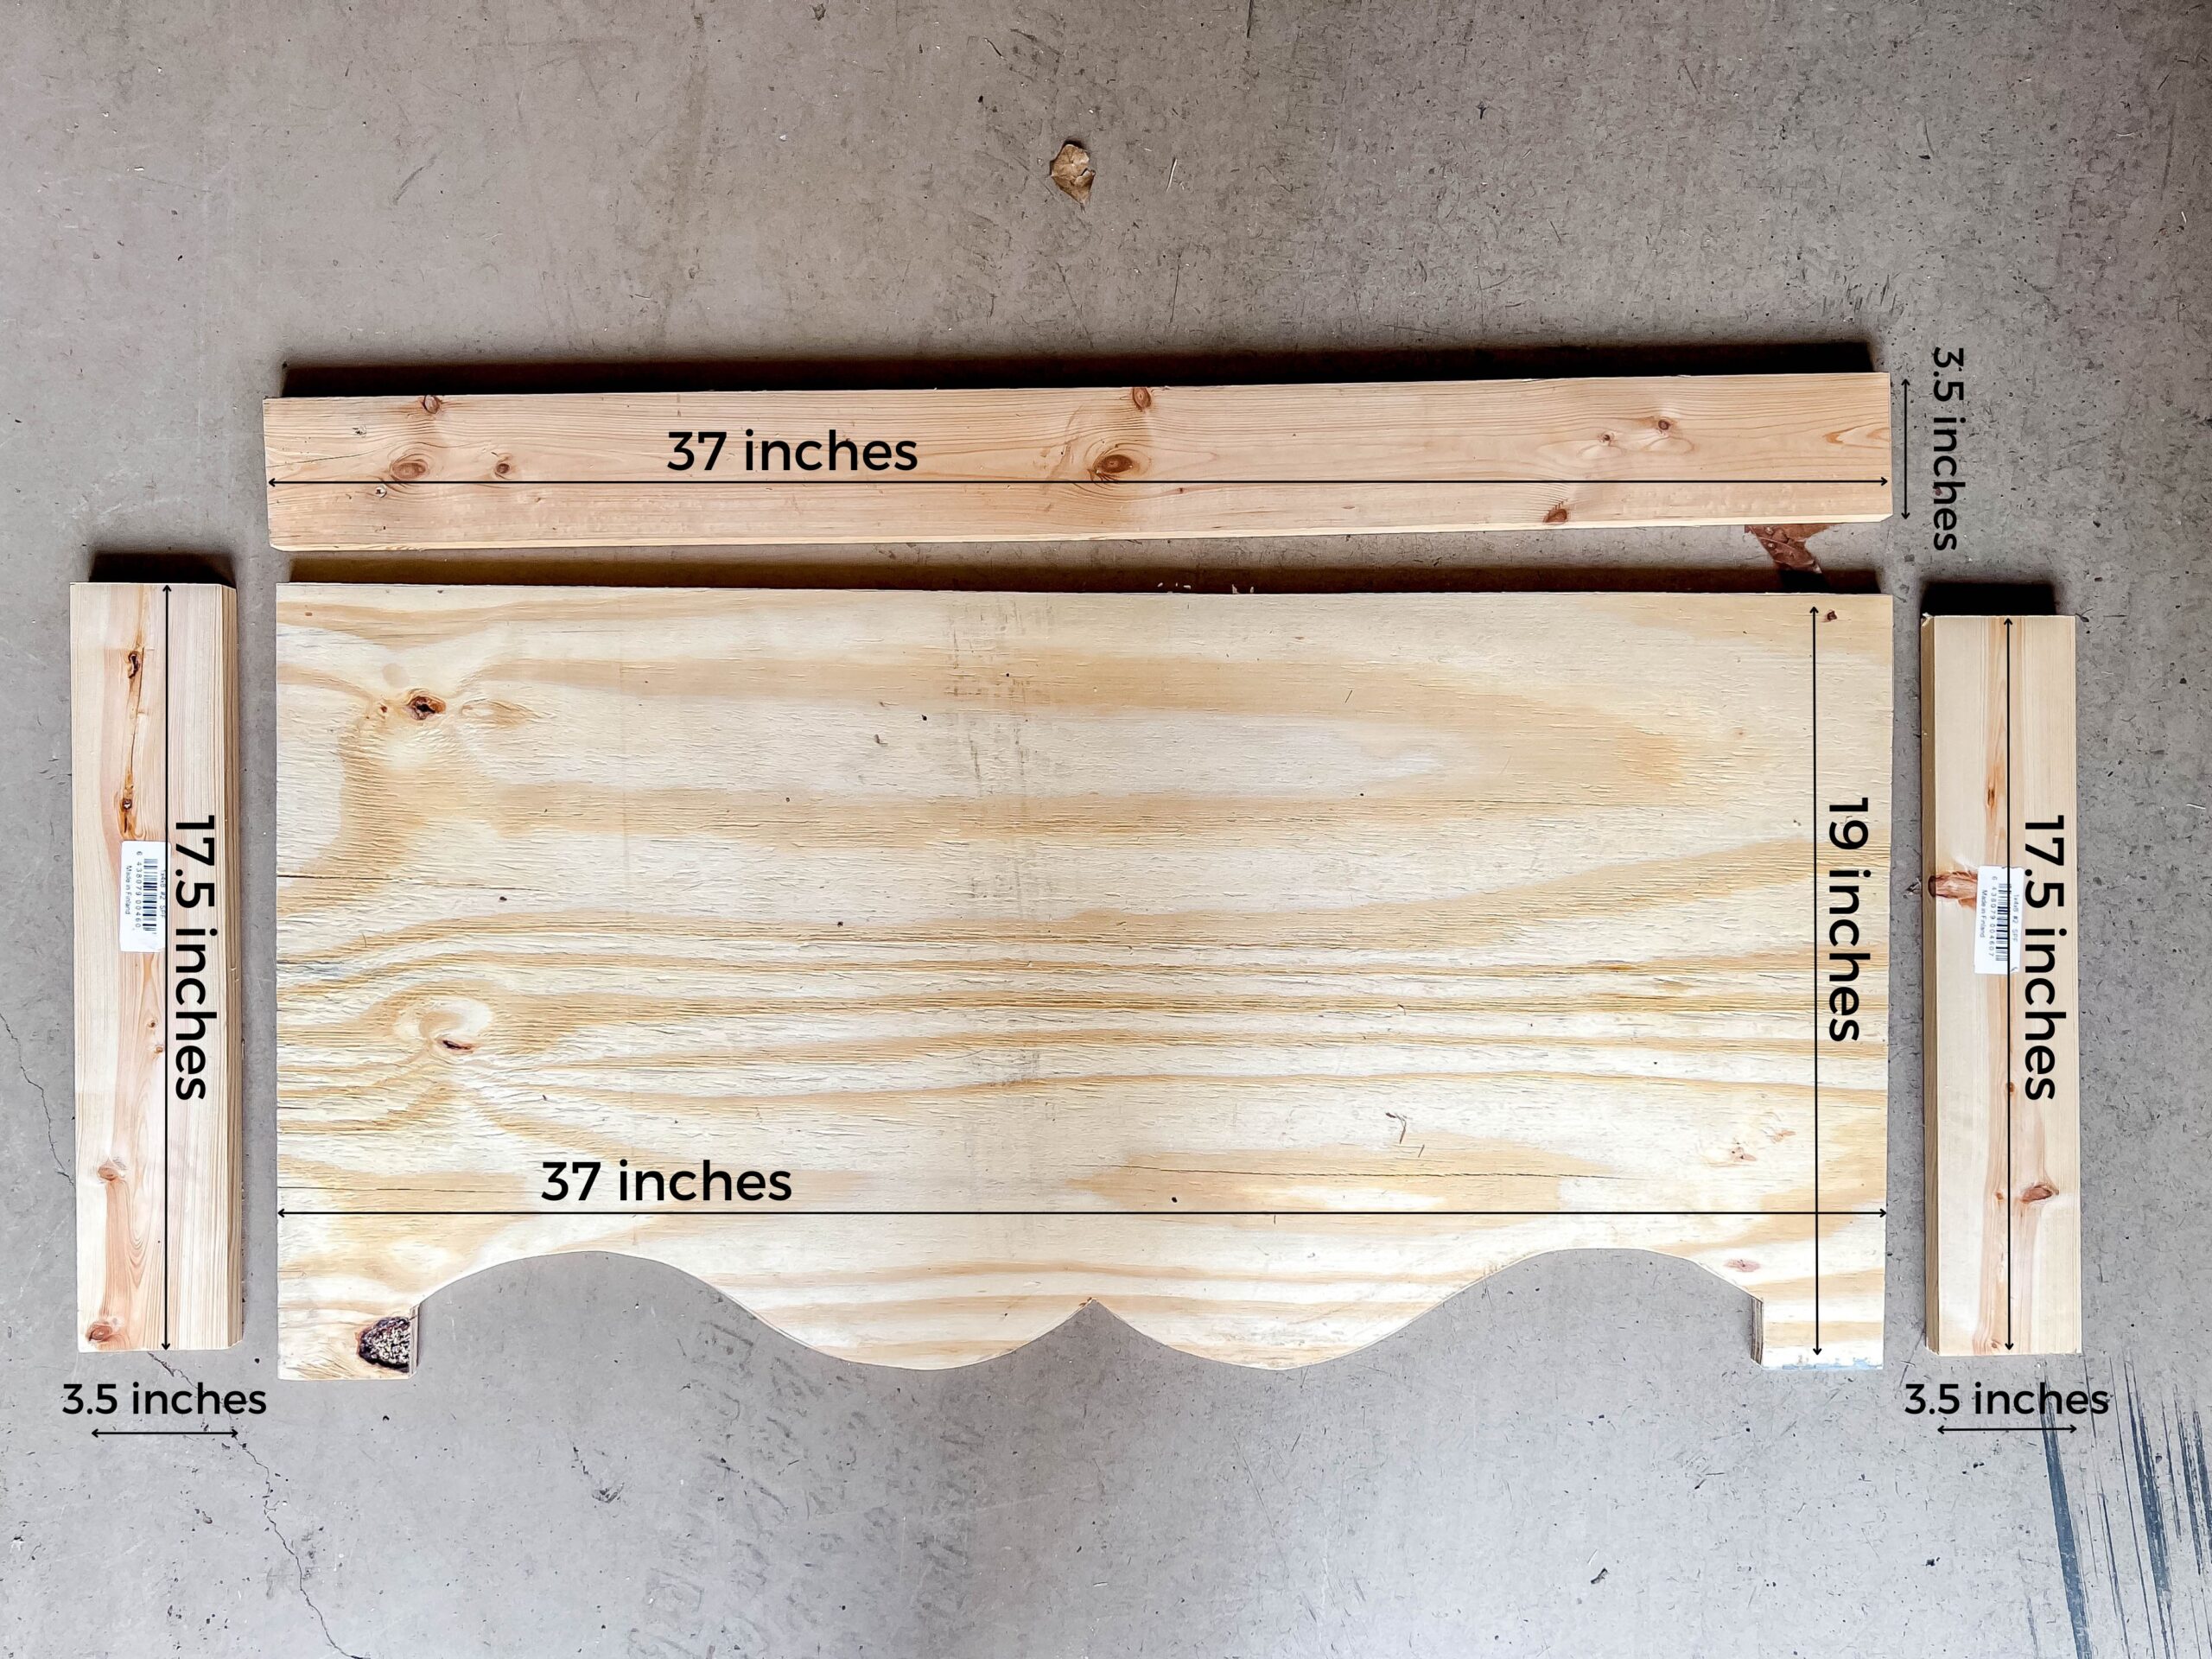 DIY cornice boards with measurements